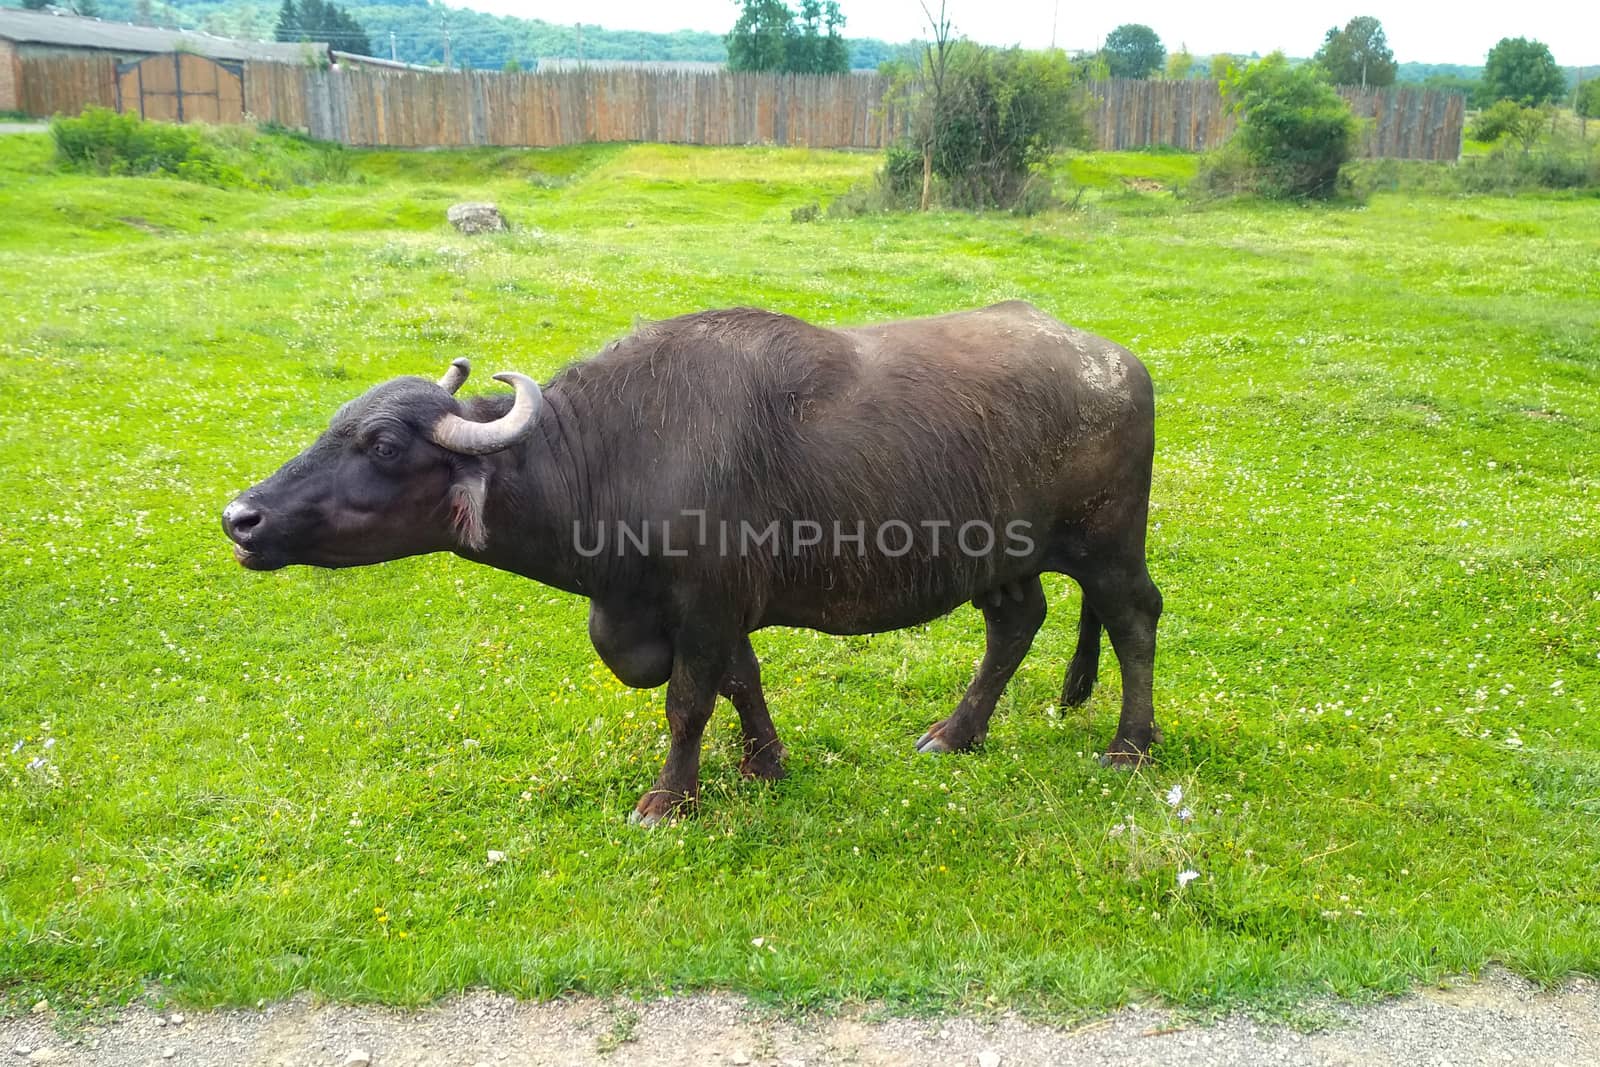 Europeanl black boffalo moo on farm against background of green grass by mtx